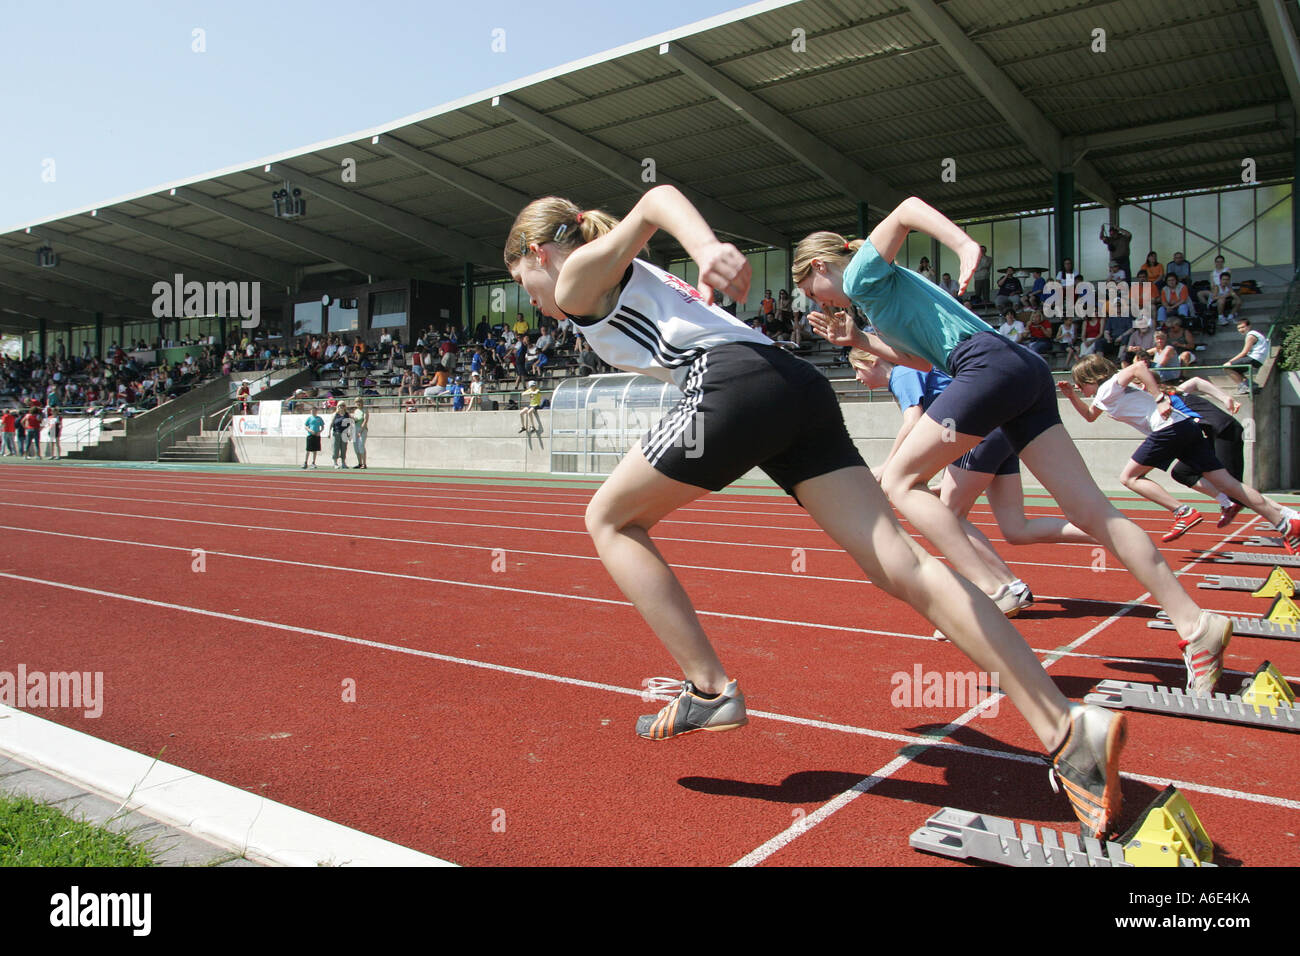 02.06.2005 Mannheim, DEU, track and field athletics season start, Stock Photo